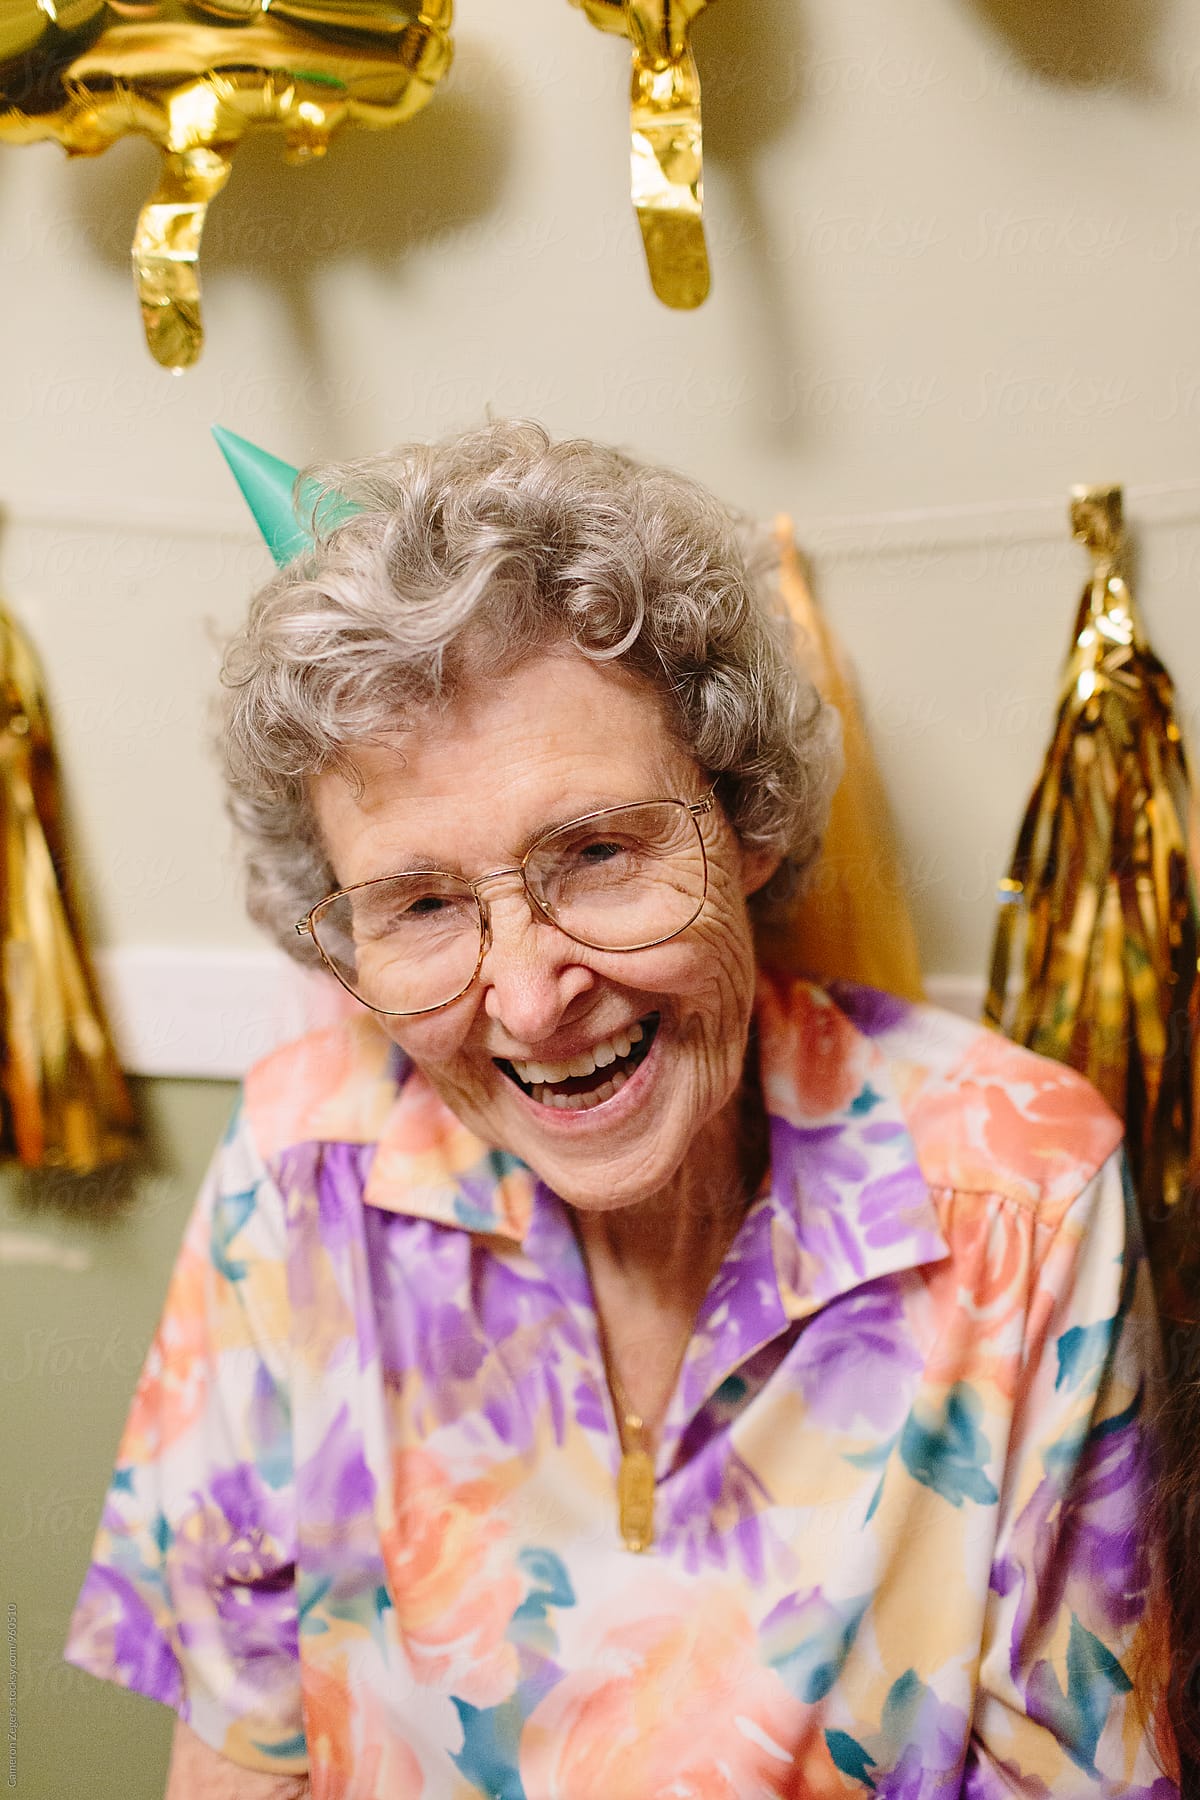 Elderly Woman Smiling Wearing Birthday Hat by Stocksy Contributor